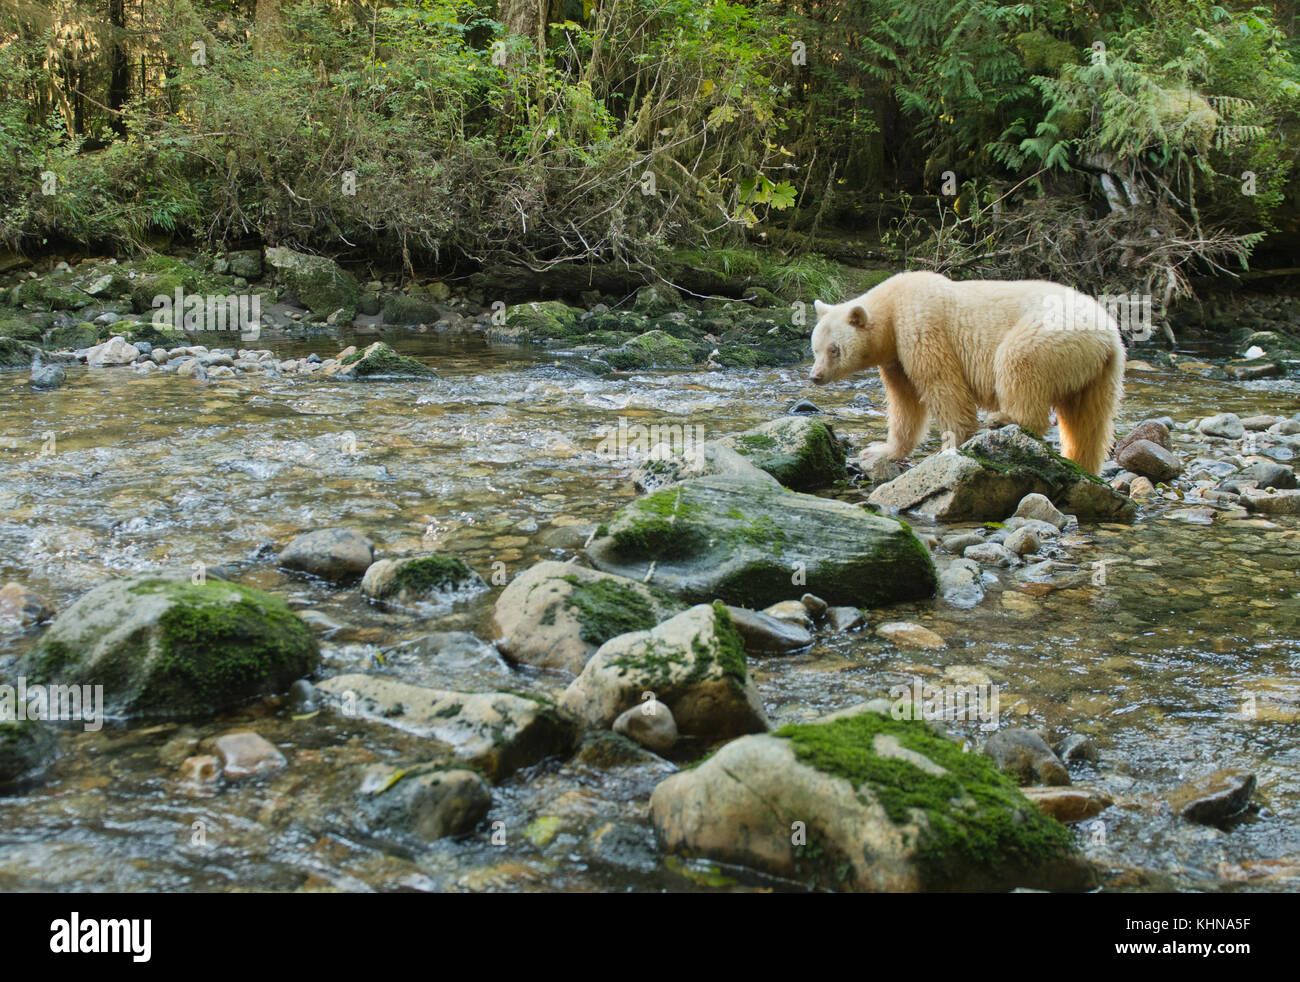 Kermode o 'espíritu' oso (Ursus americanus kermodei), blanco Forma de oso negro americano, Great Bear rainforest, BC, Canadá Foto de stock